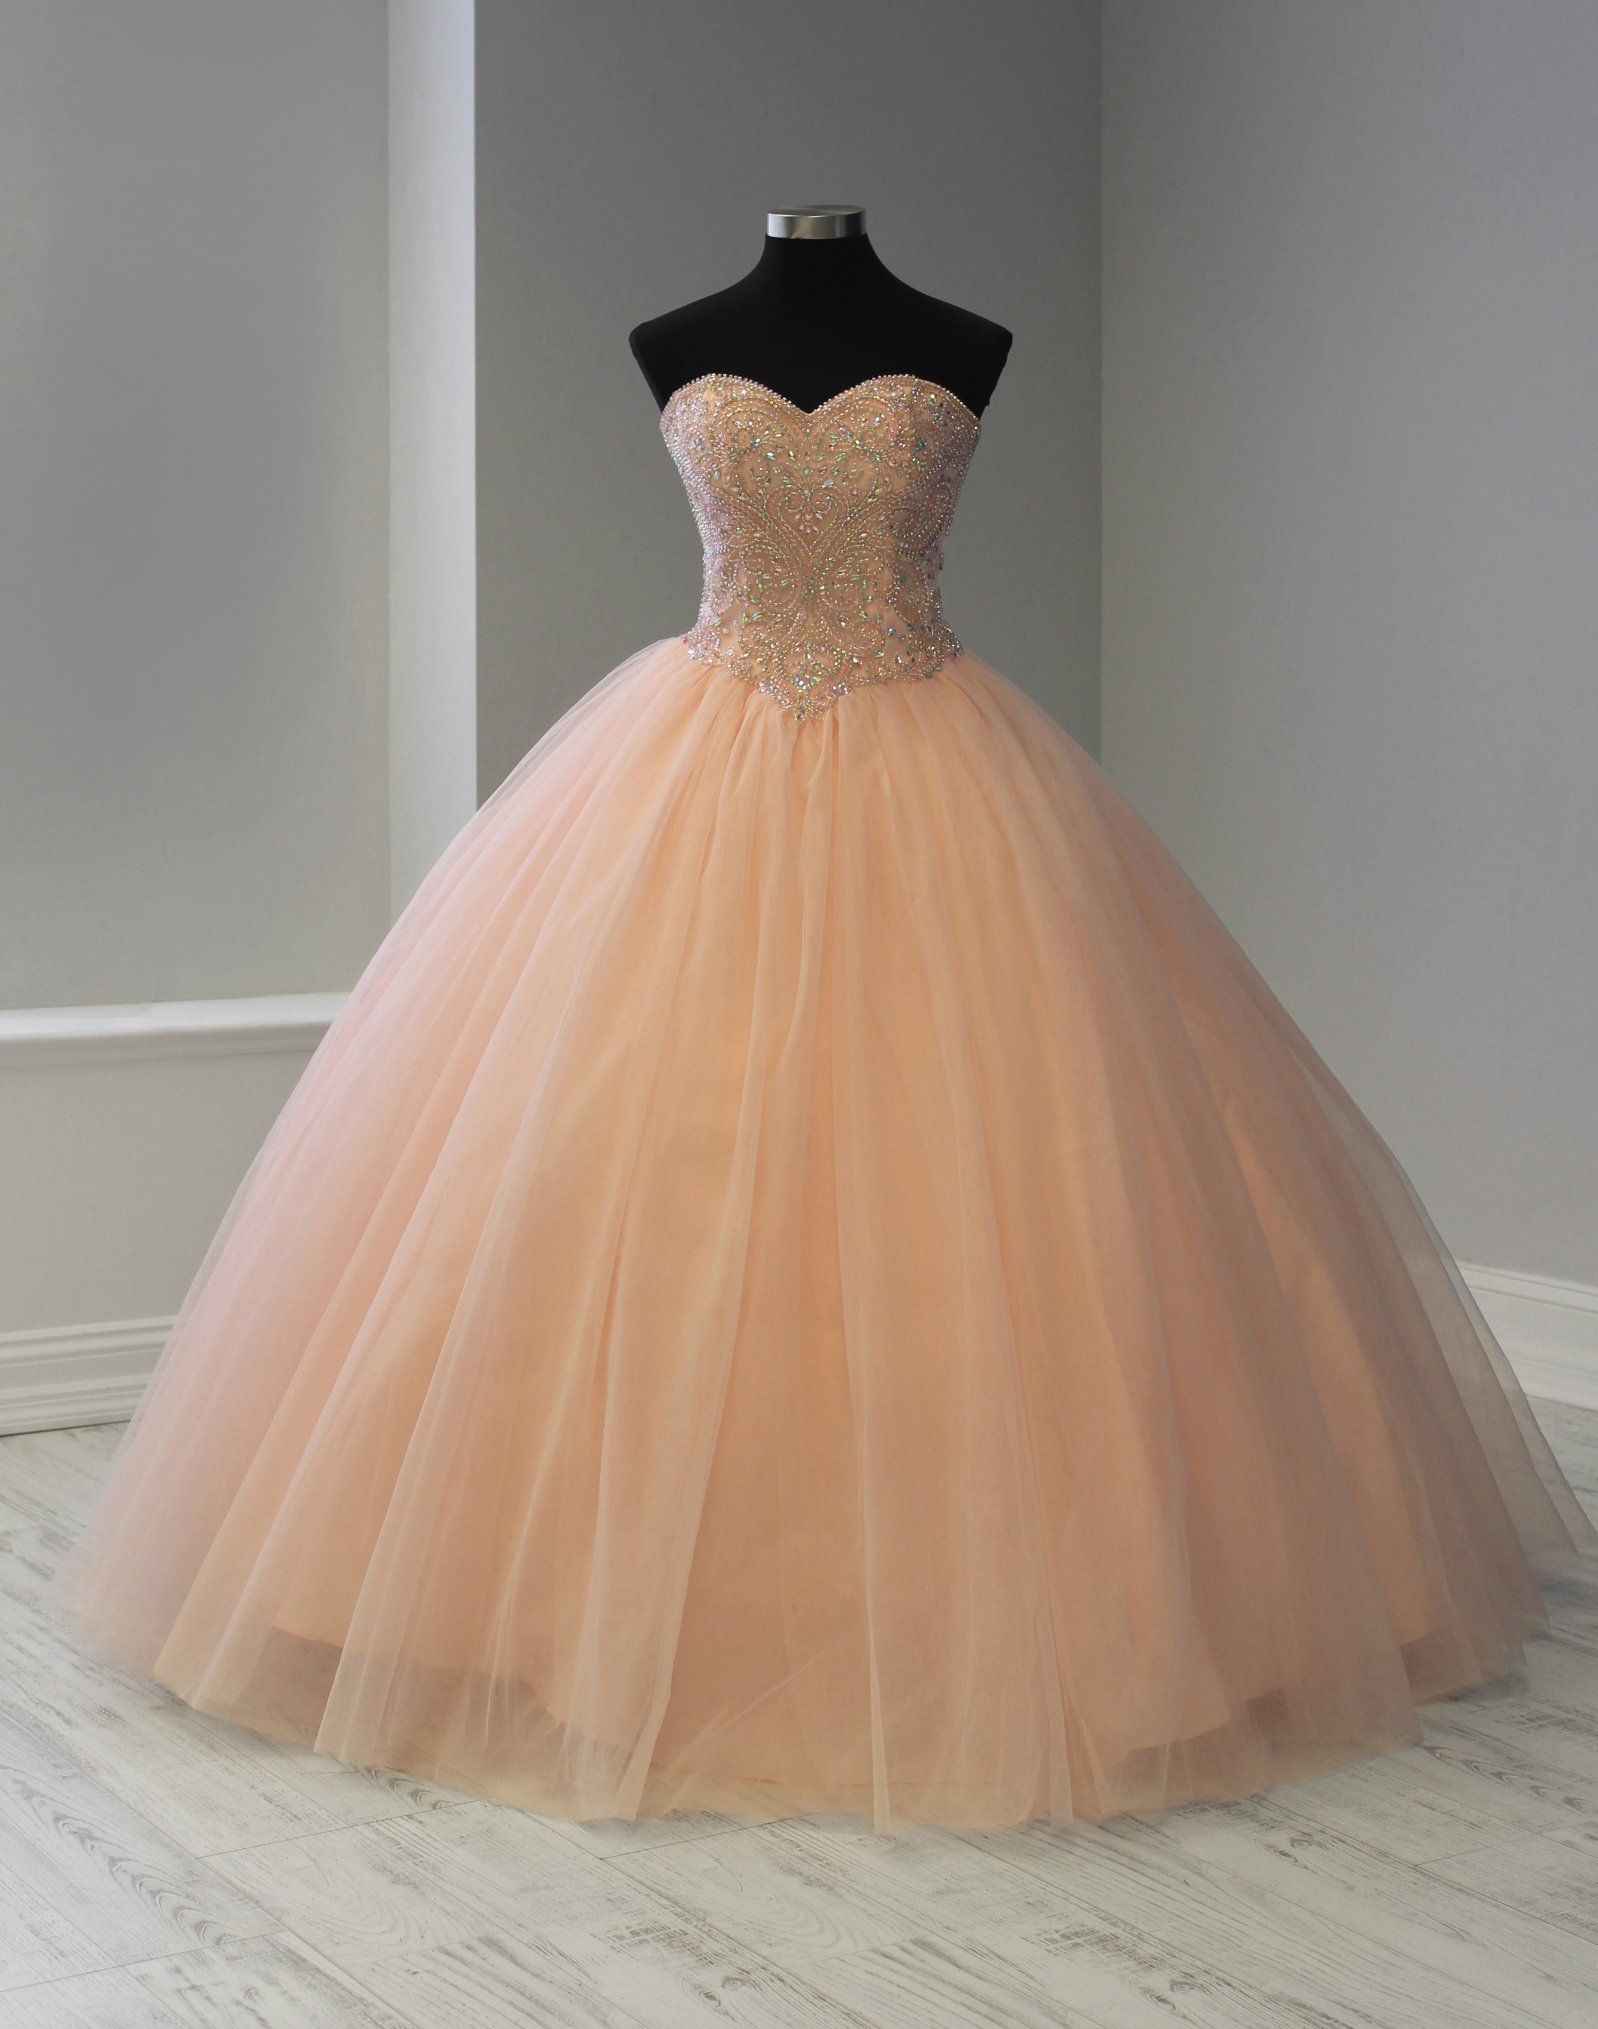 Strapless Sweetheart Quinceanera Dress by Fiesta Gowns 56366 -   19 dress Quinceanera gold ideas